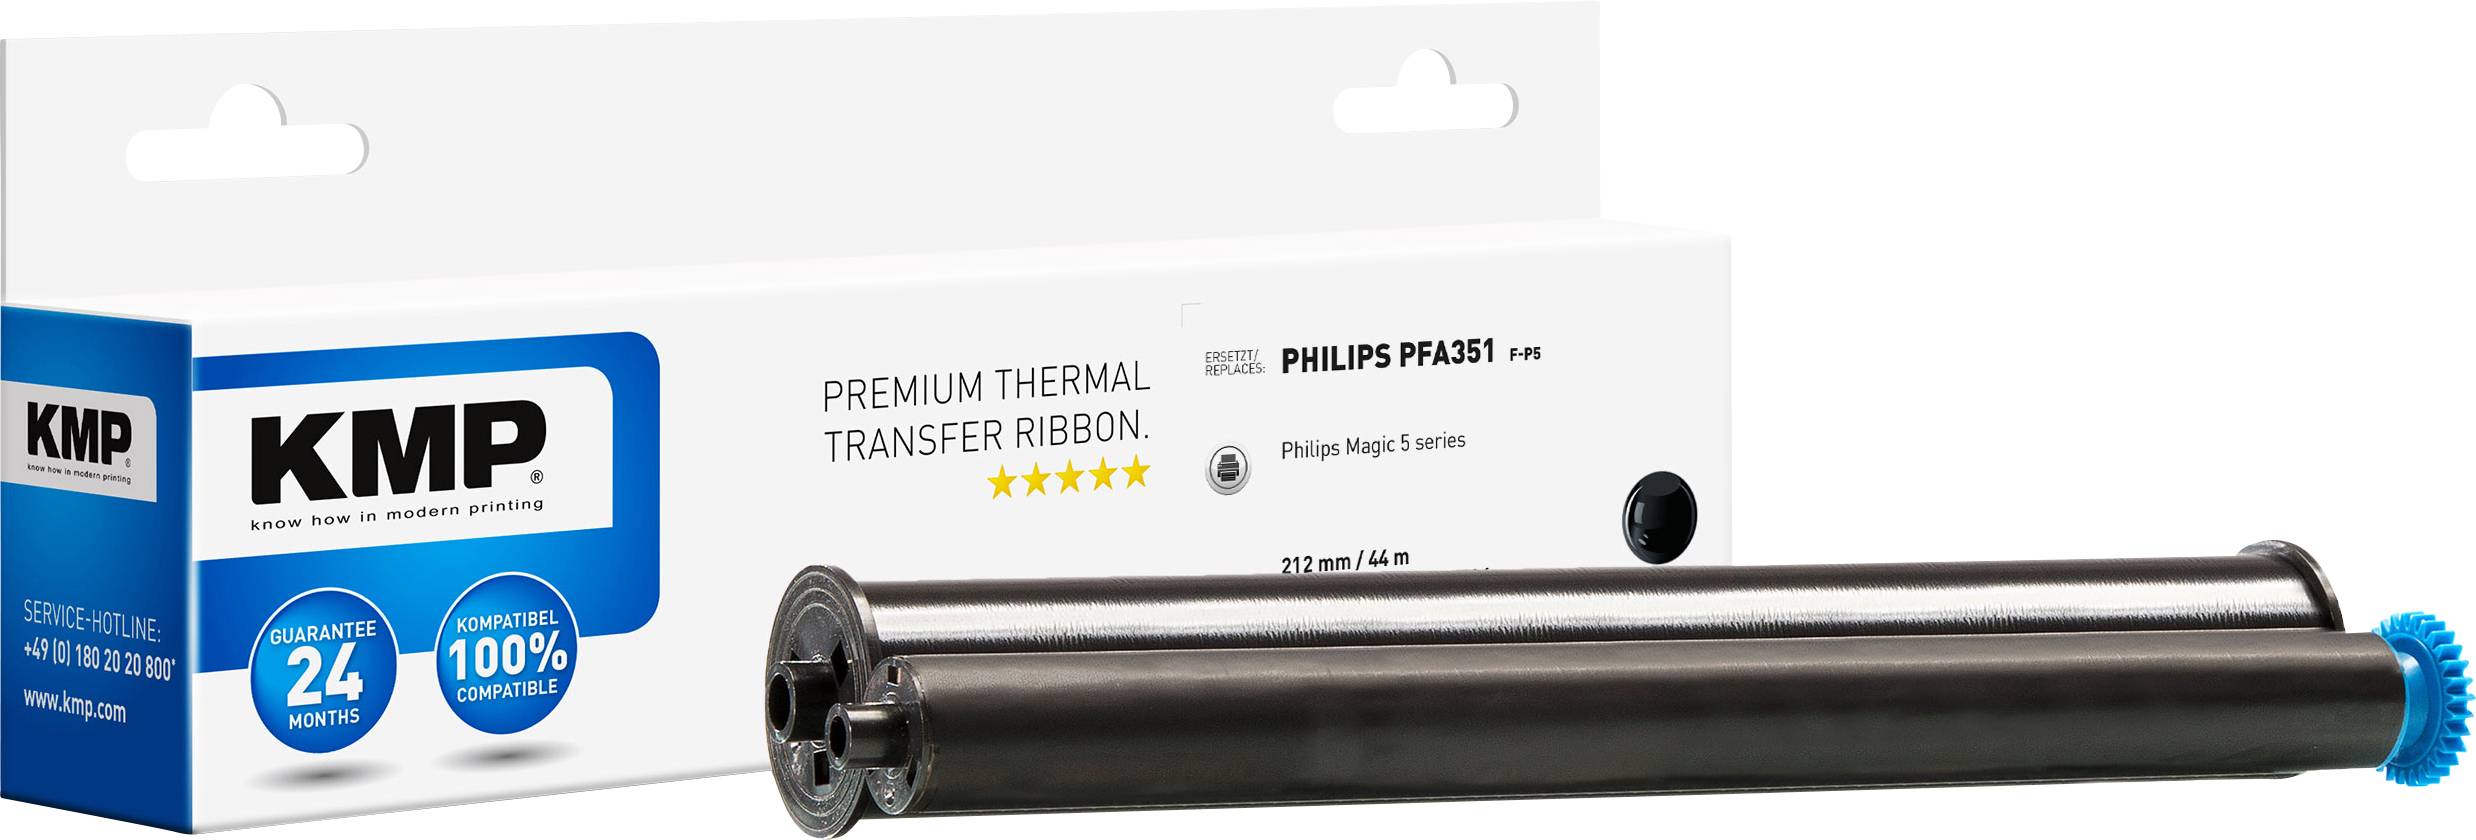 PPF211 kompatibel 2x Thermo-Transfer-Rolle Alternativ für Philips PPF 211 